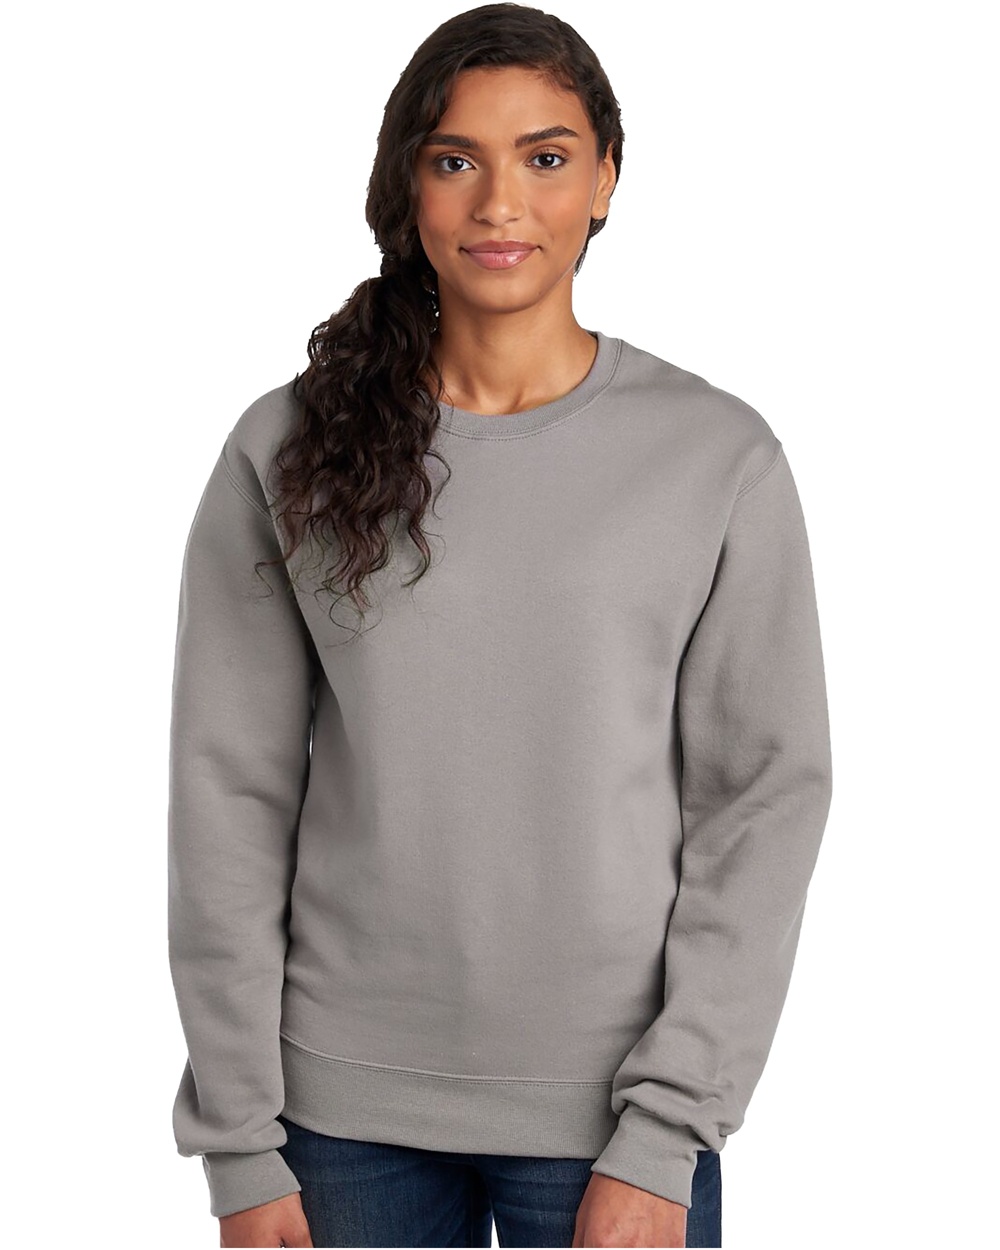 JZ360 - NuBlend® Unisex Sweatshirt - One Stop